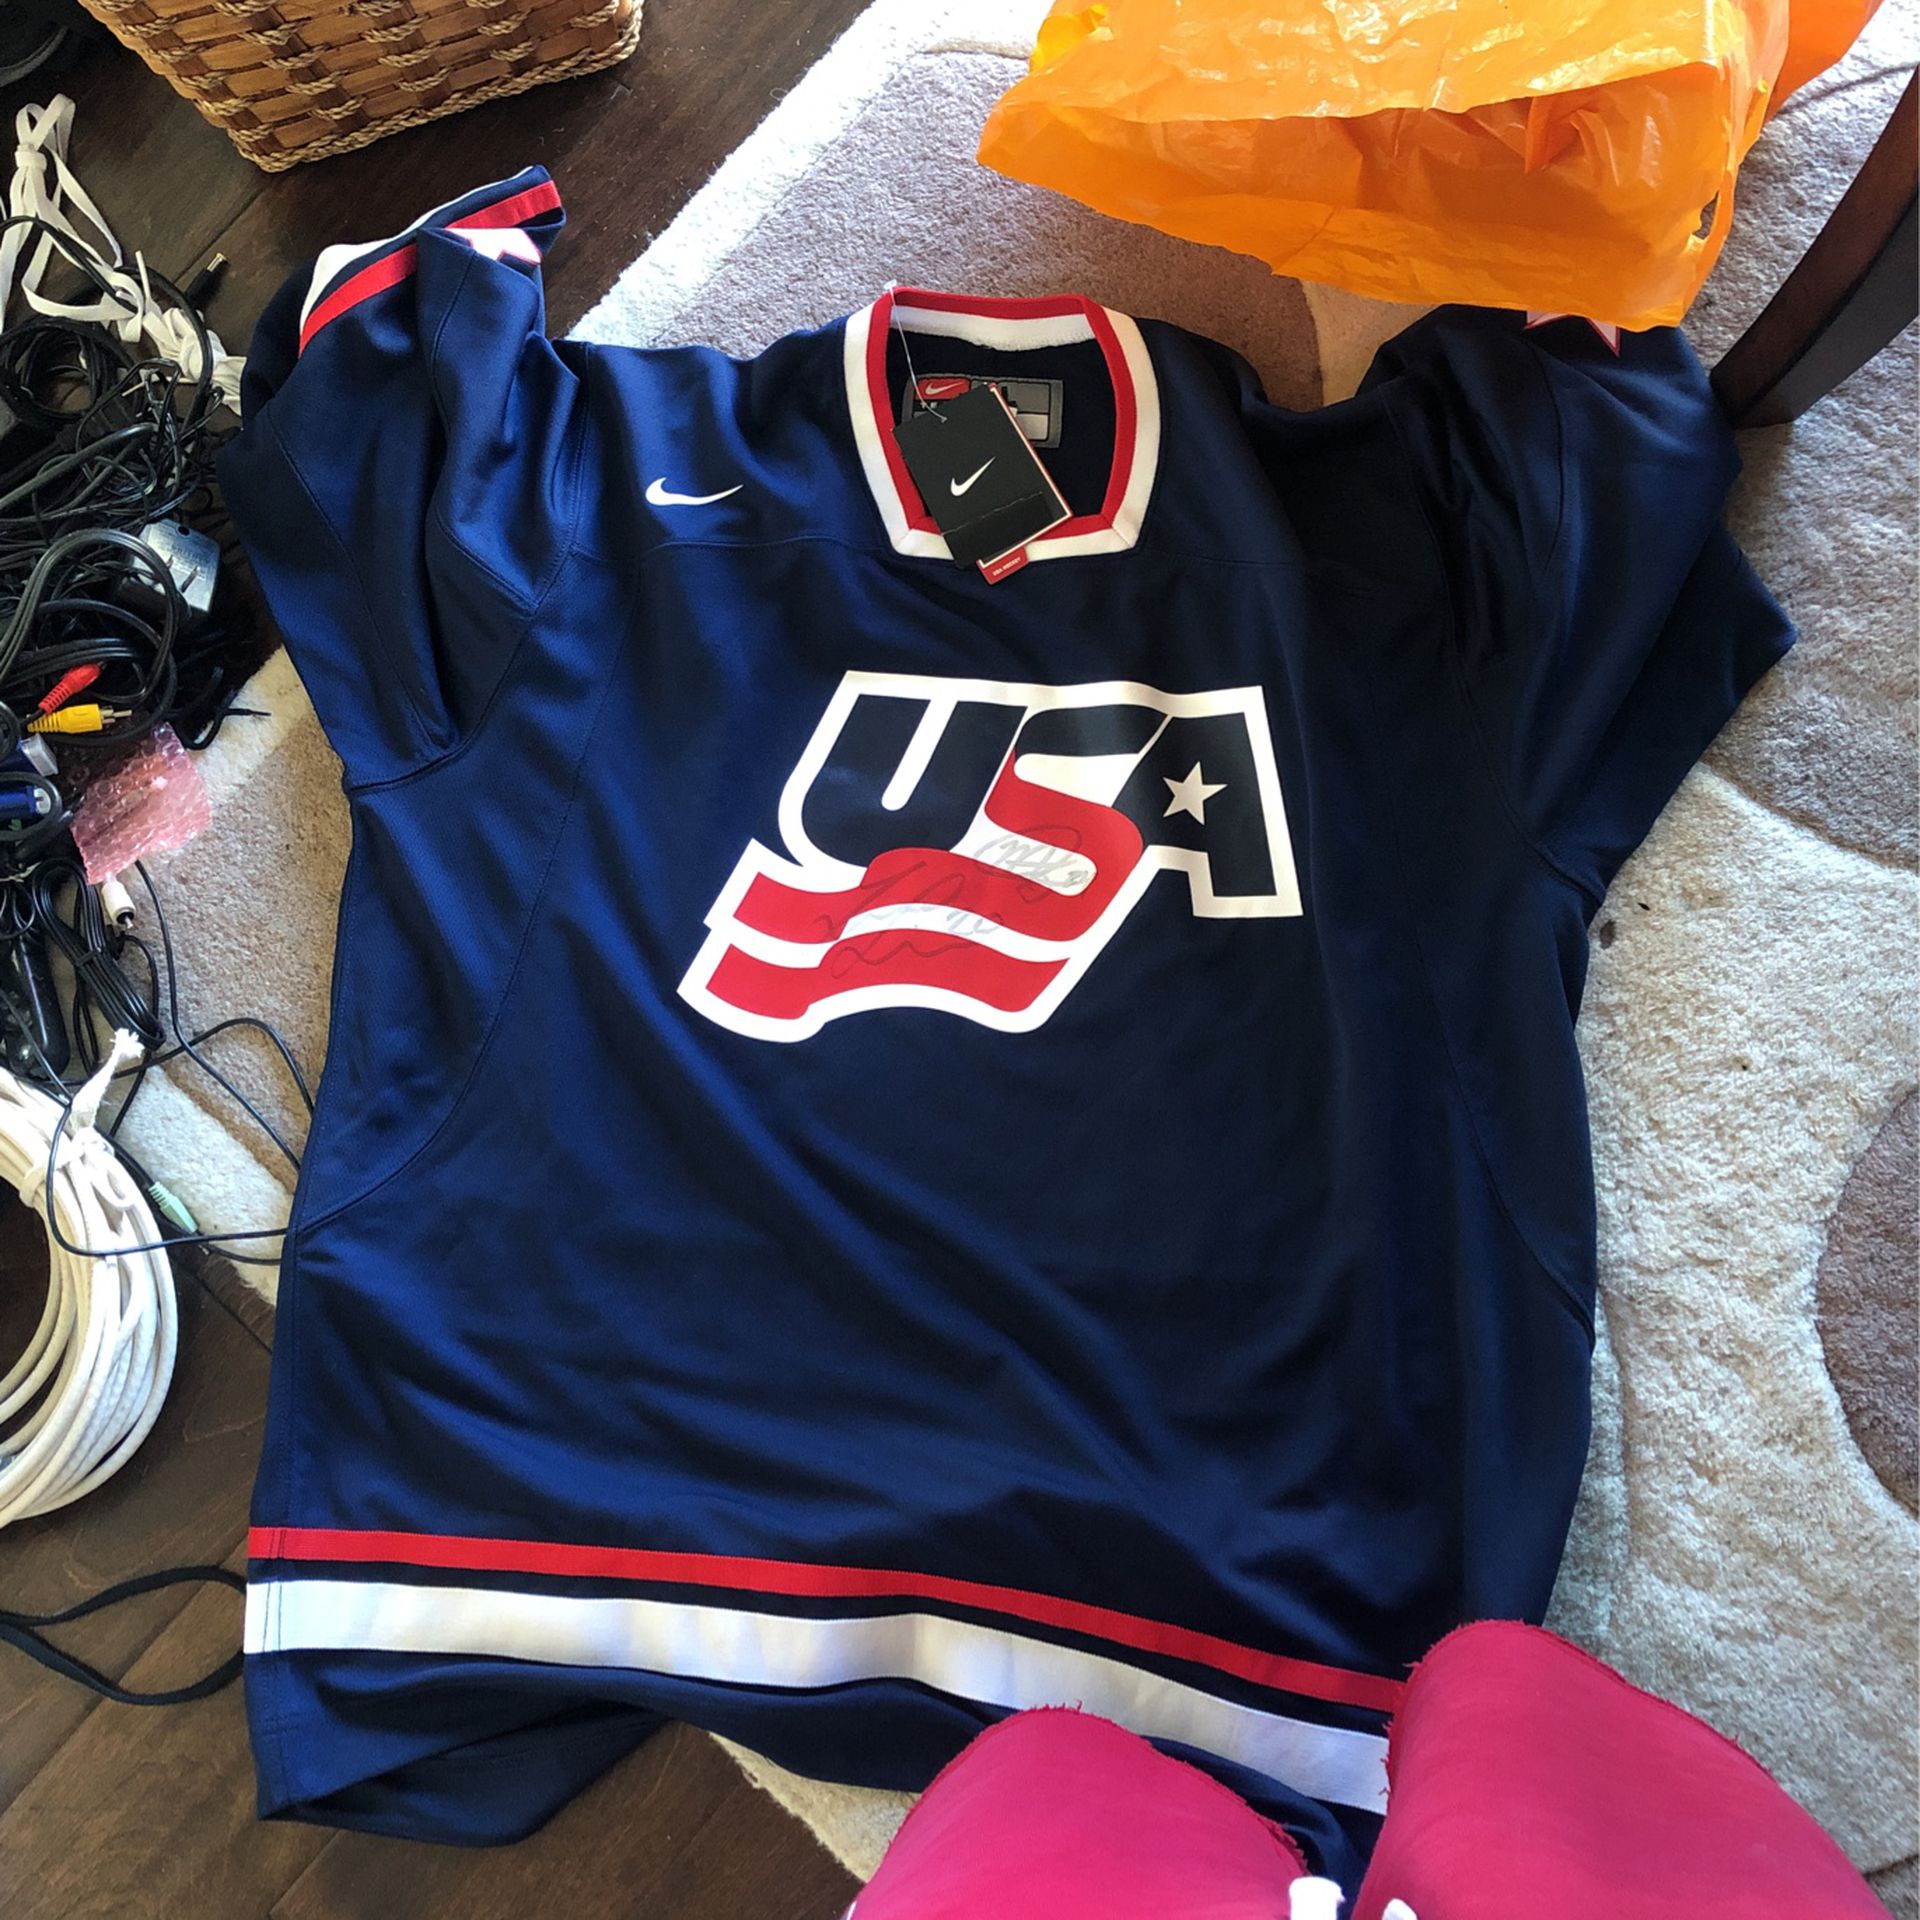 USA hockey practice jersey